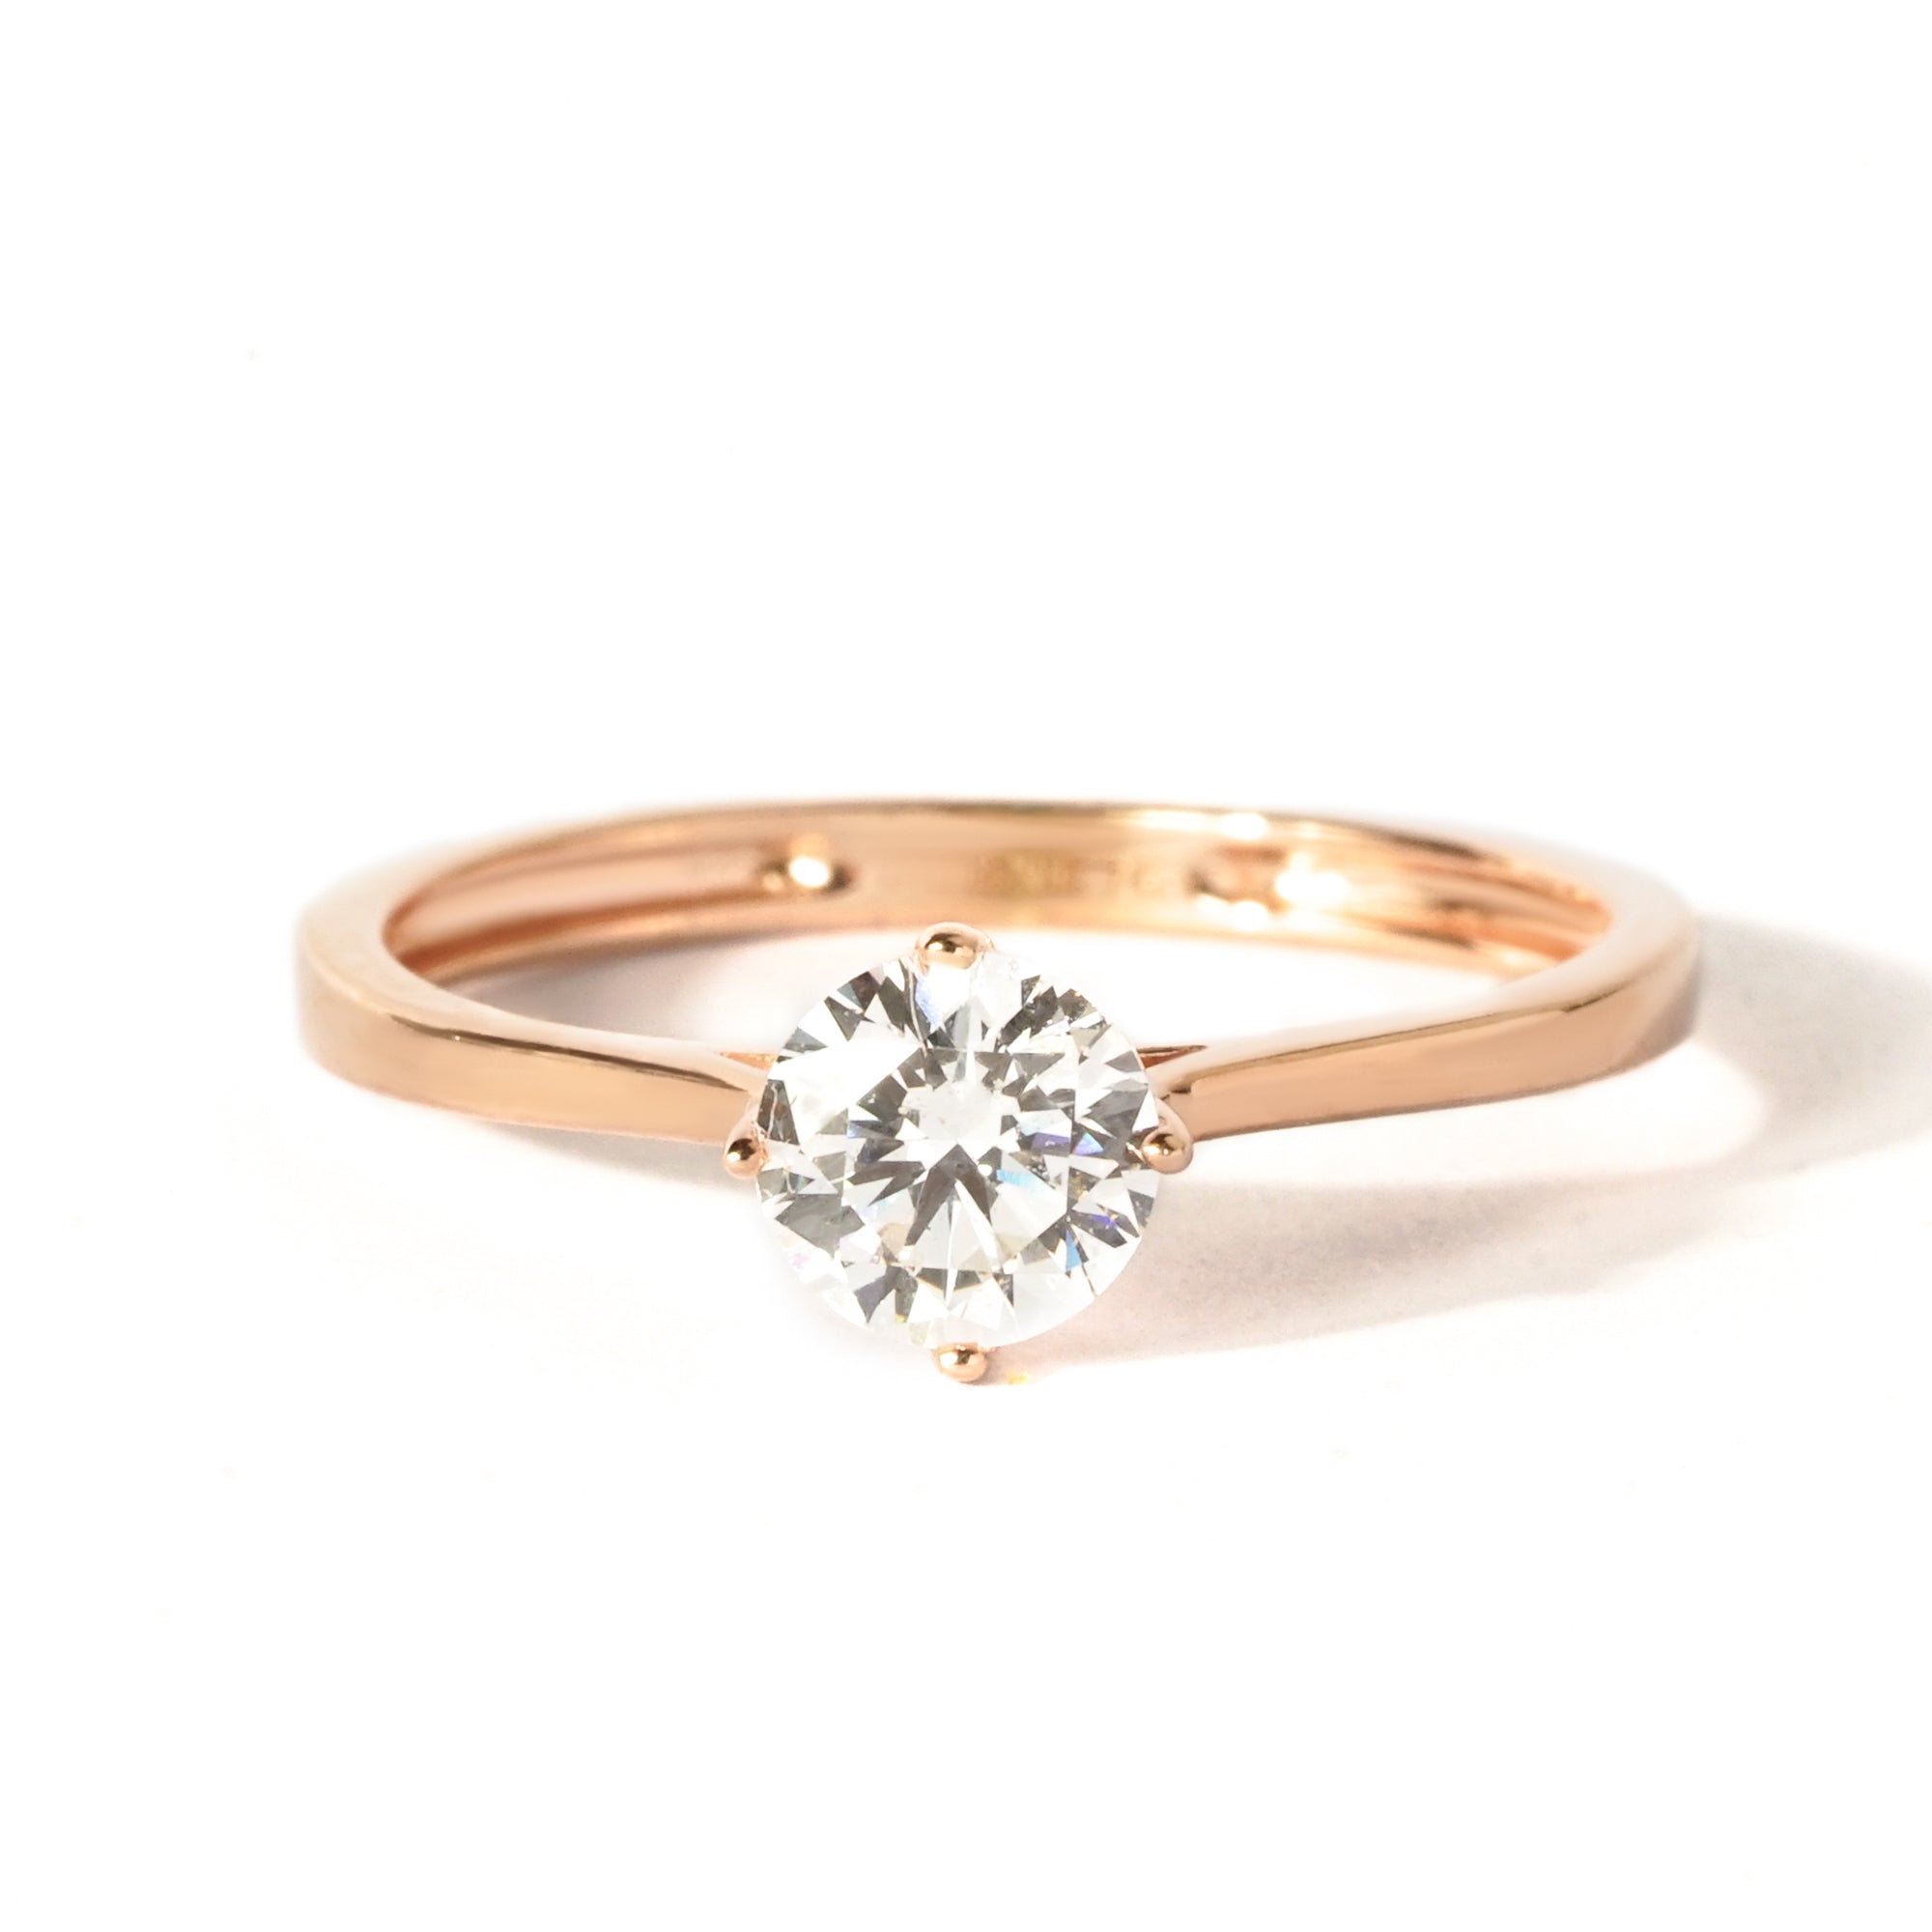 Eva Gold Ring - WS 02 Seasons - Juene Jewelry